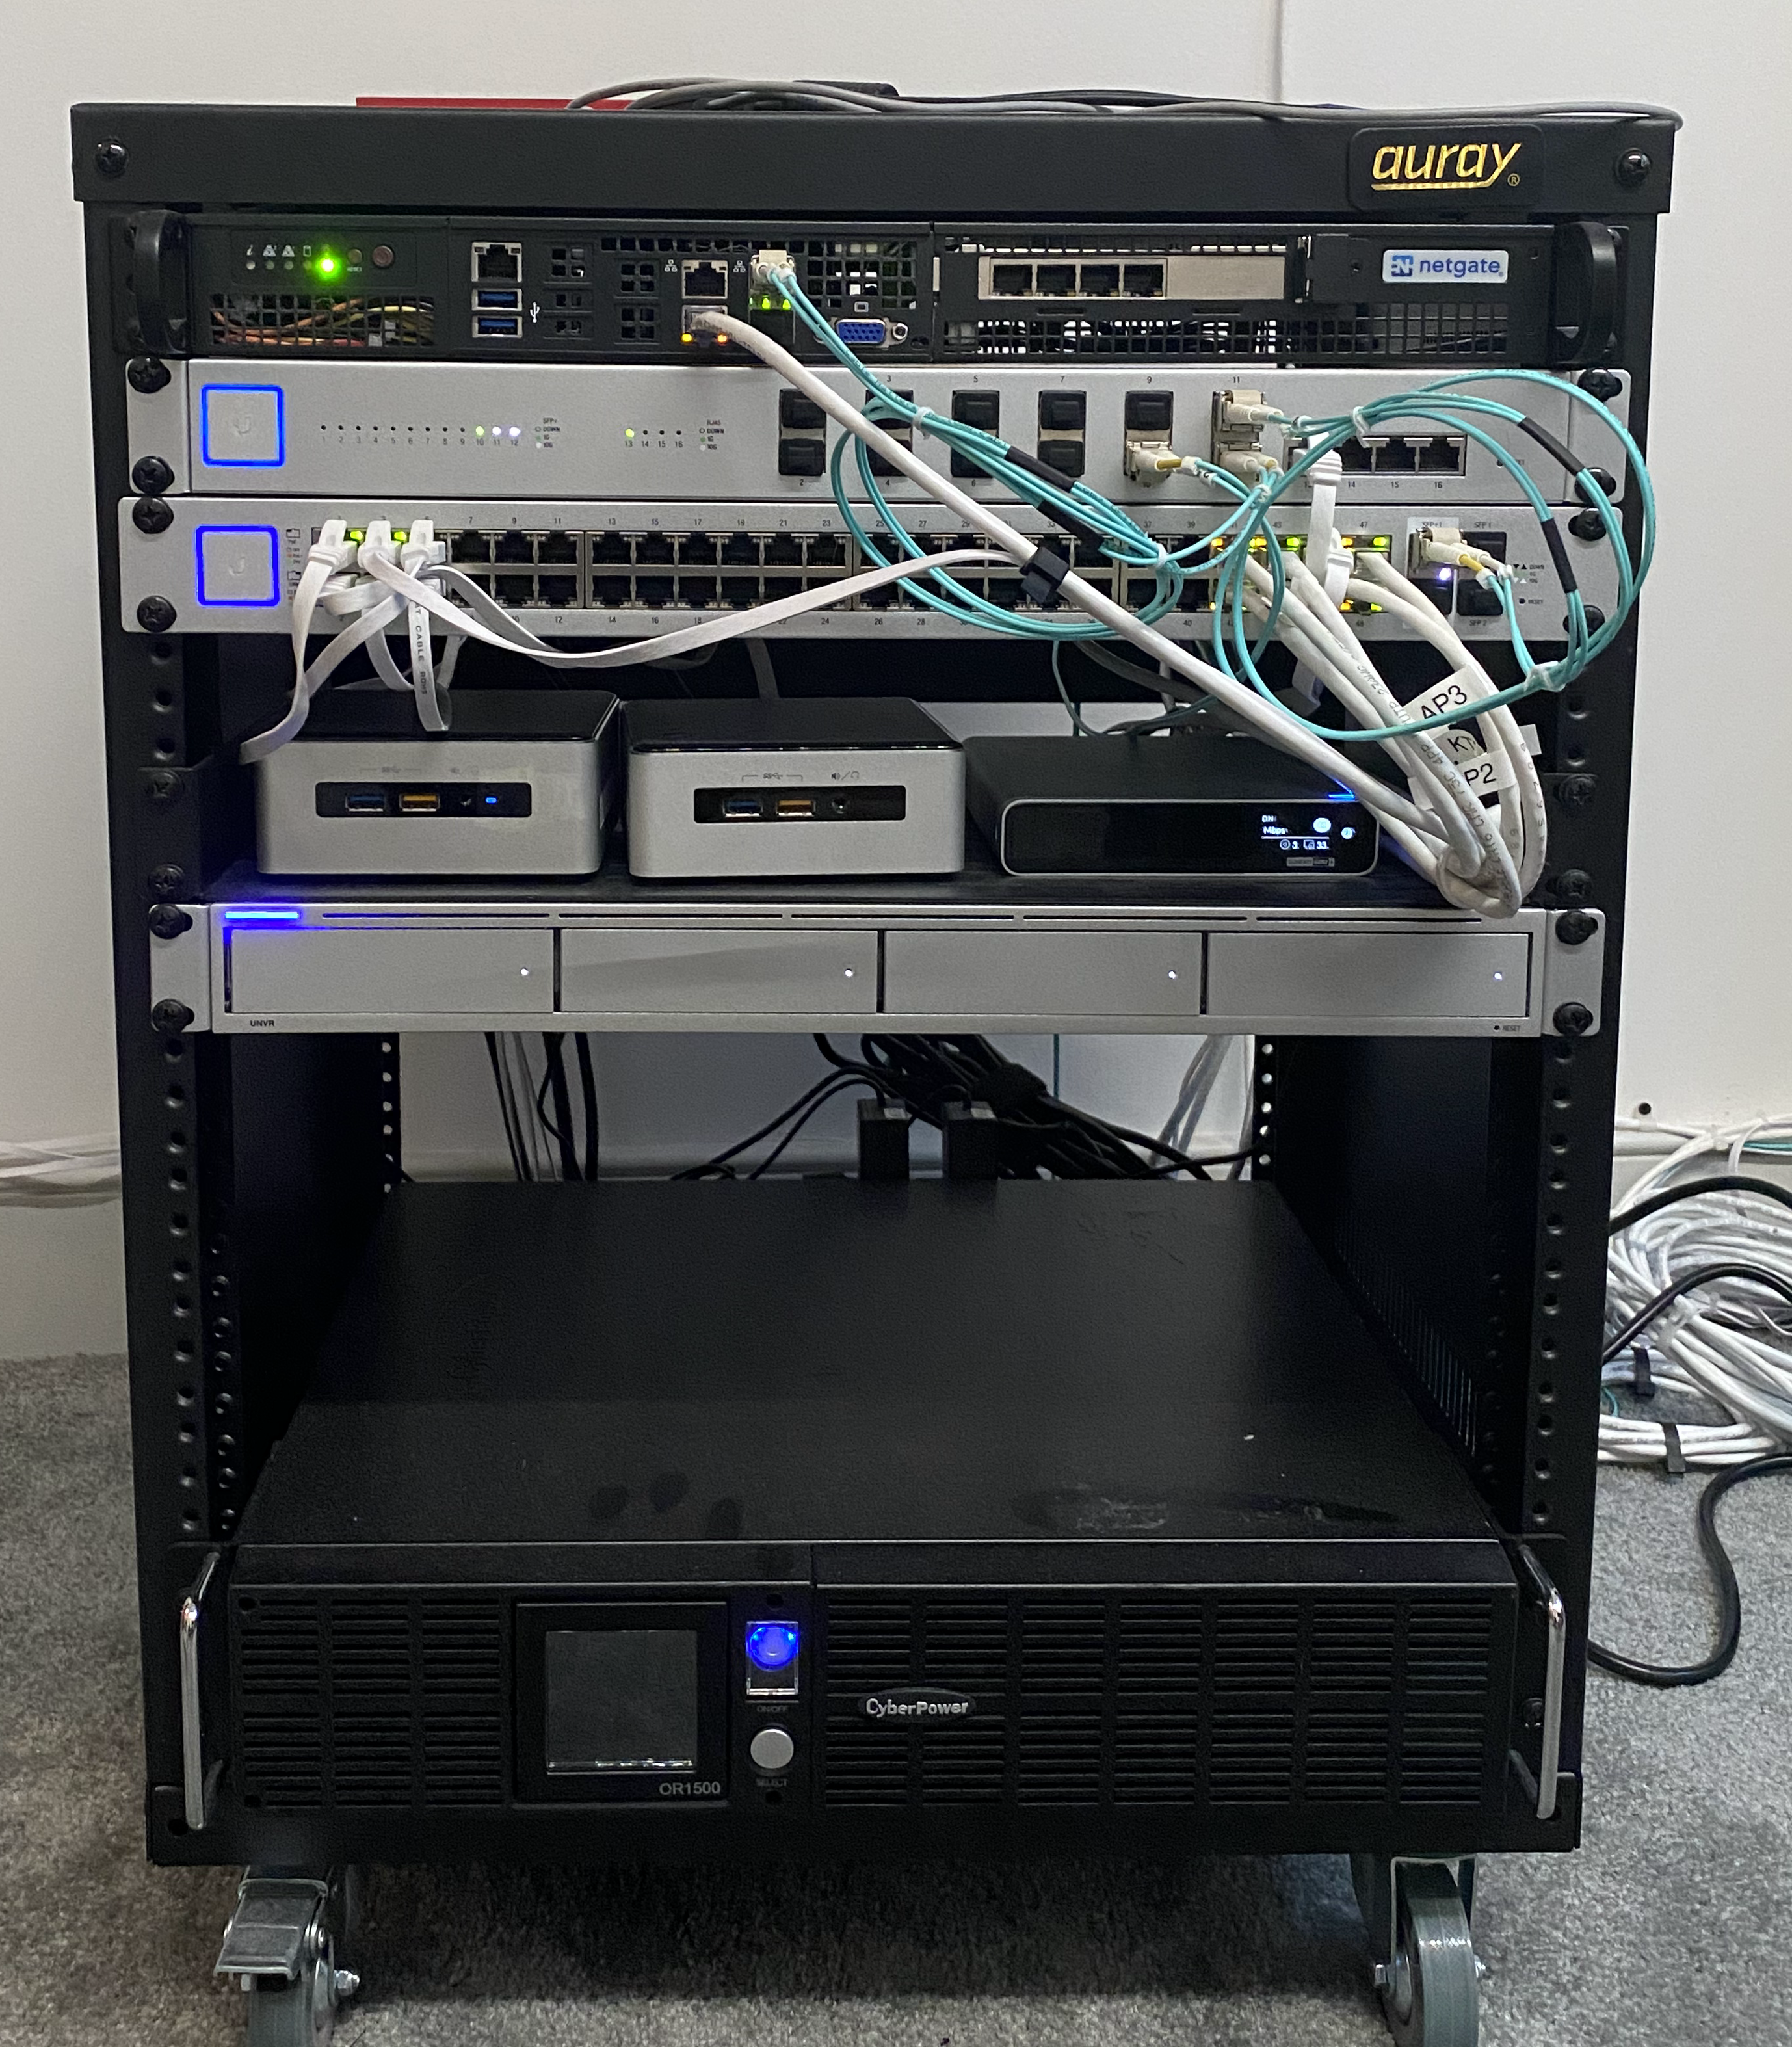 Network Rack